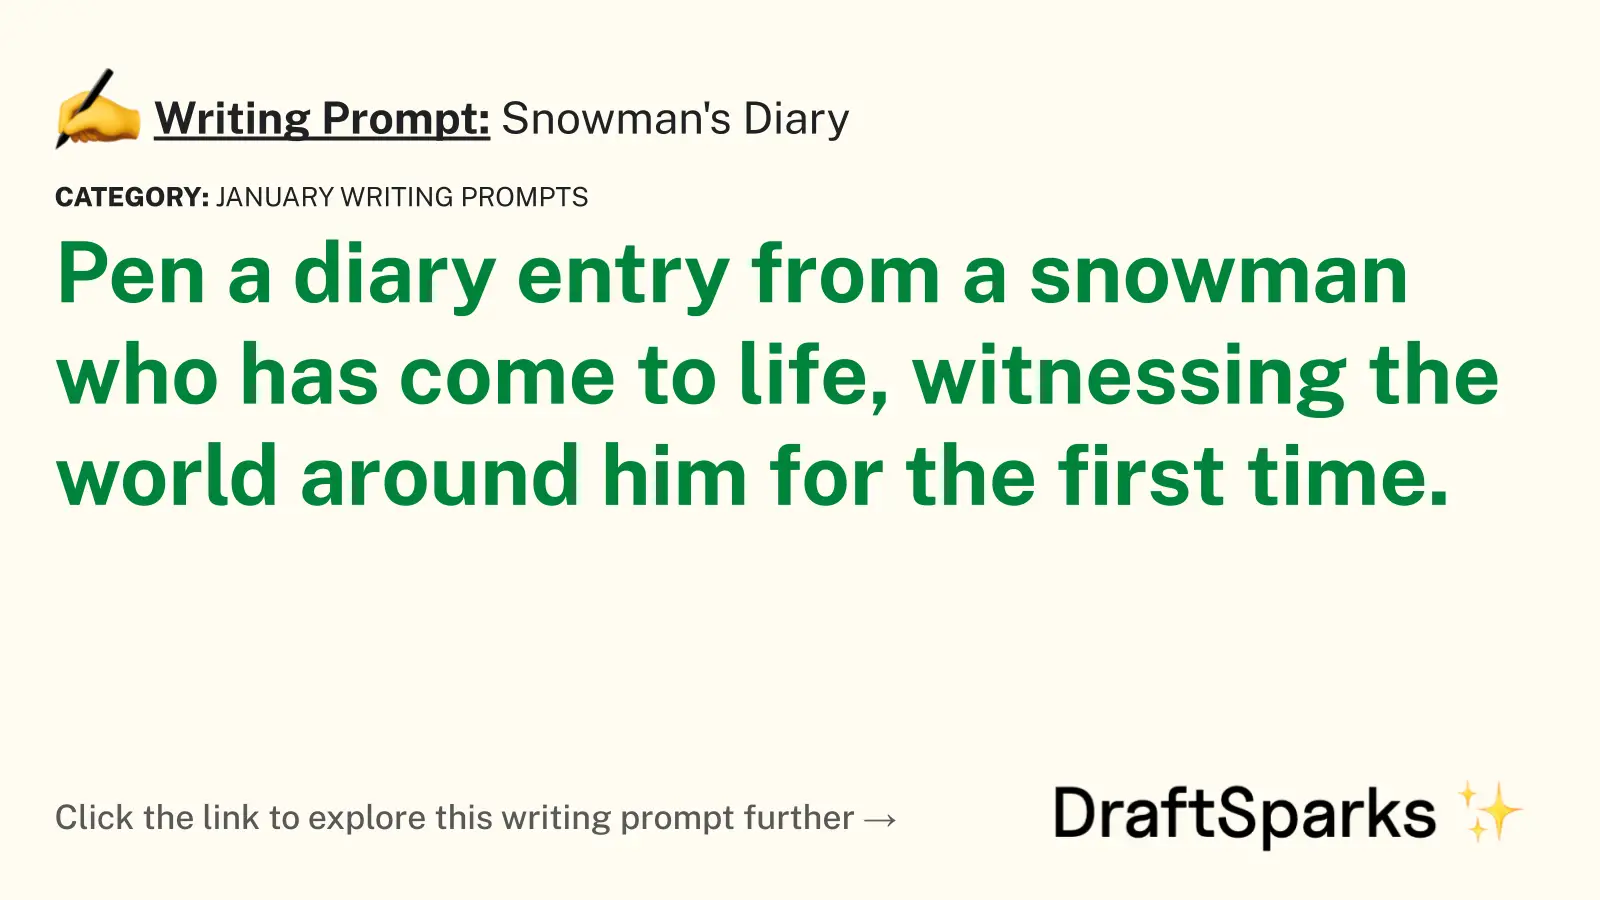 Snowman’s Diary